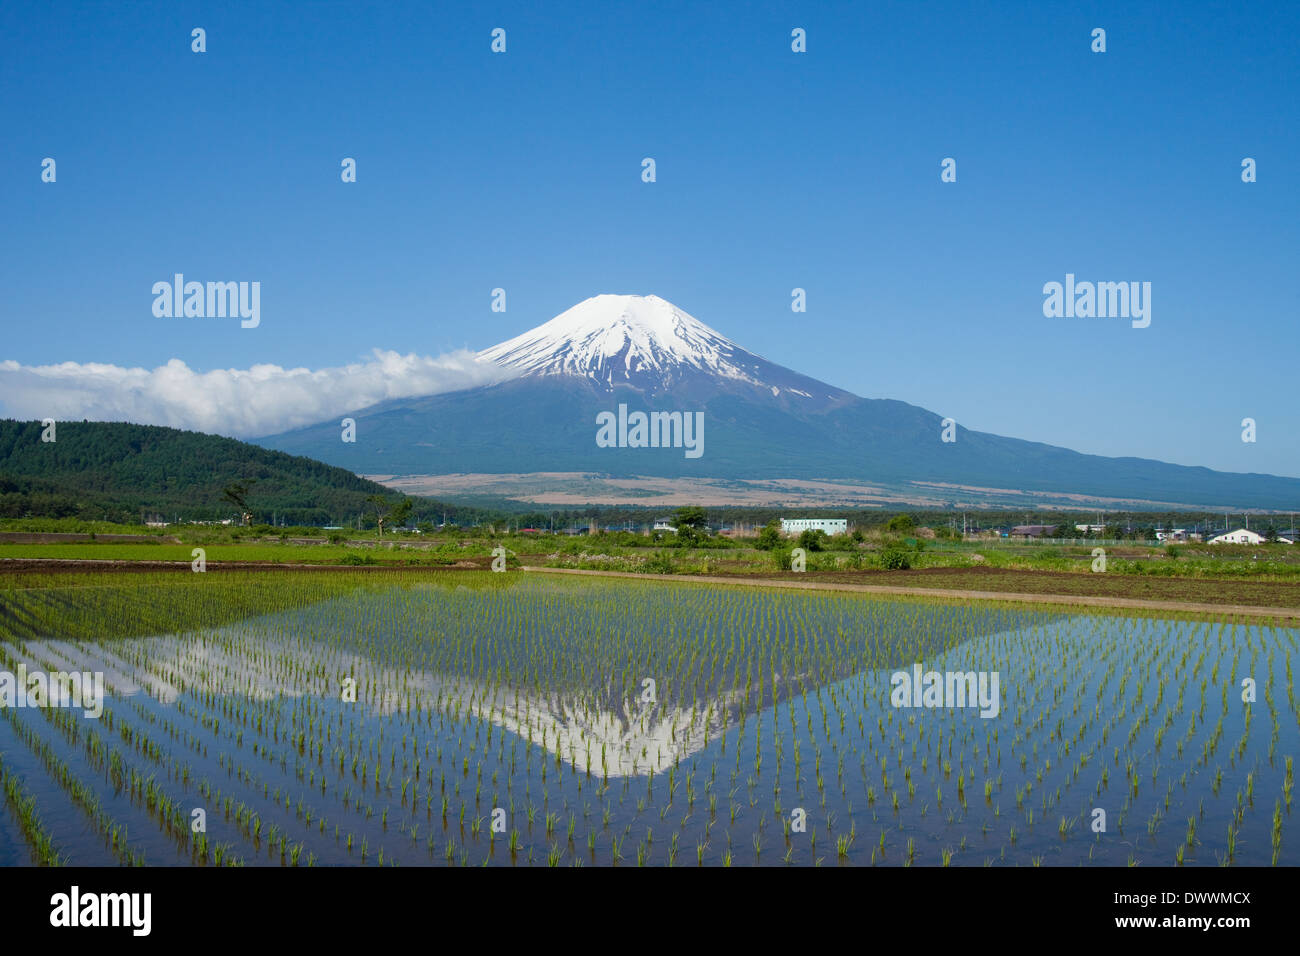 Mt Fuji and rice paddy Stock Photo